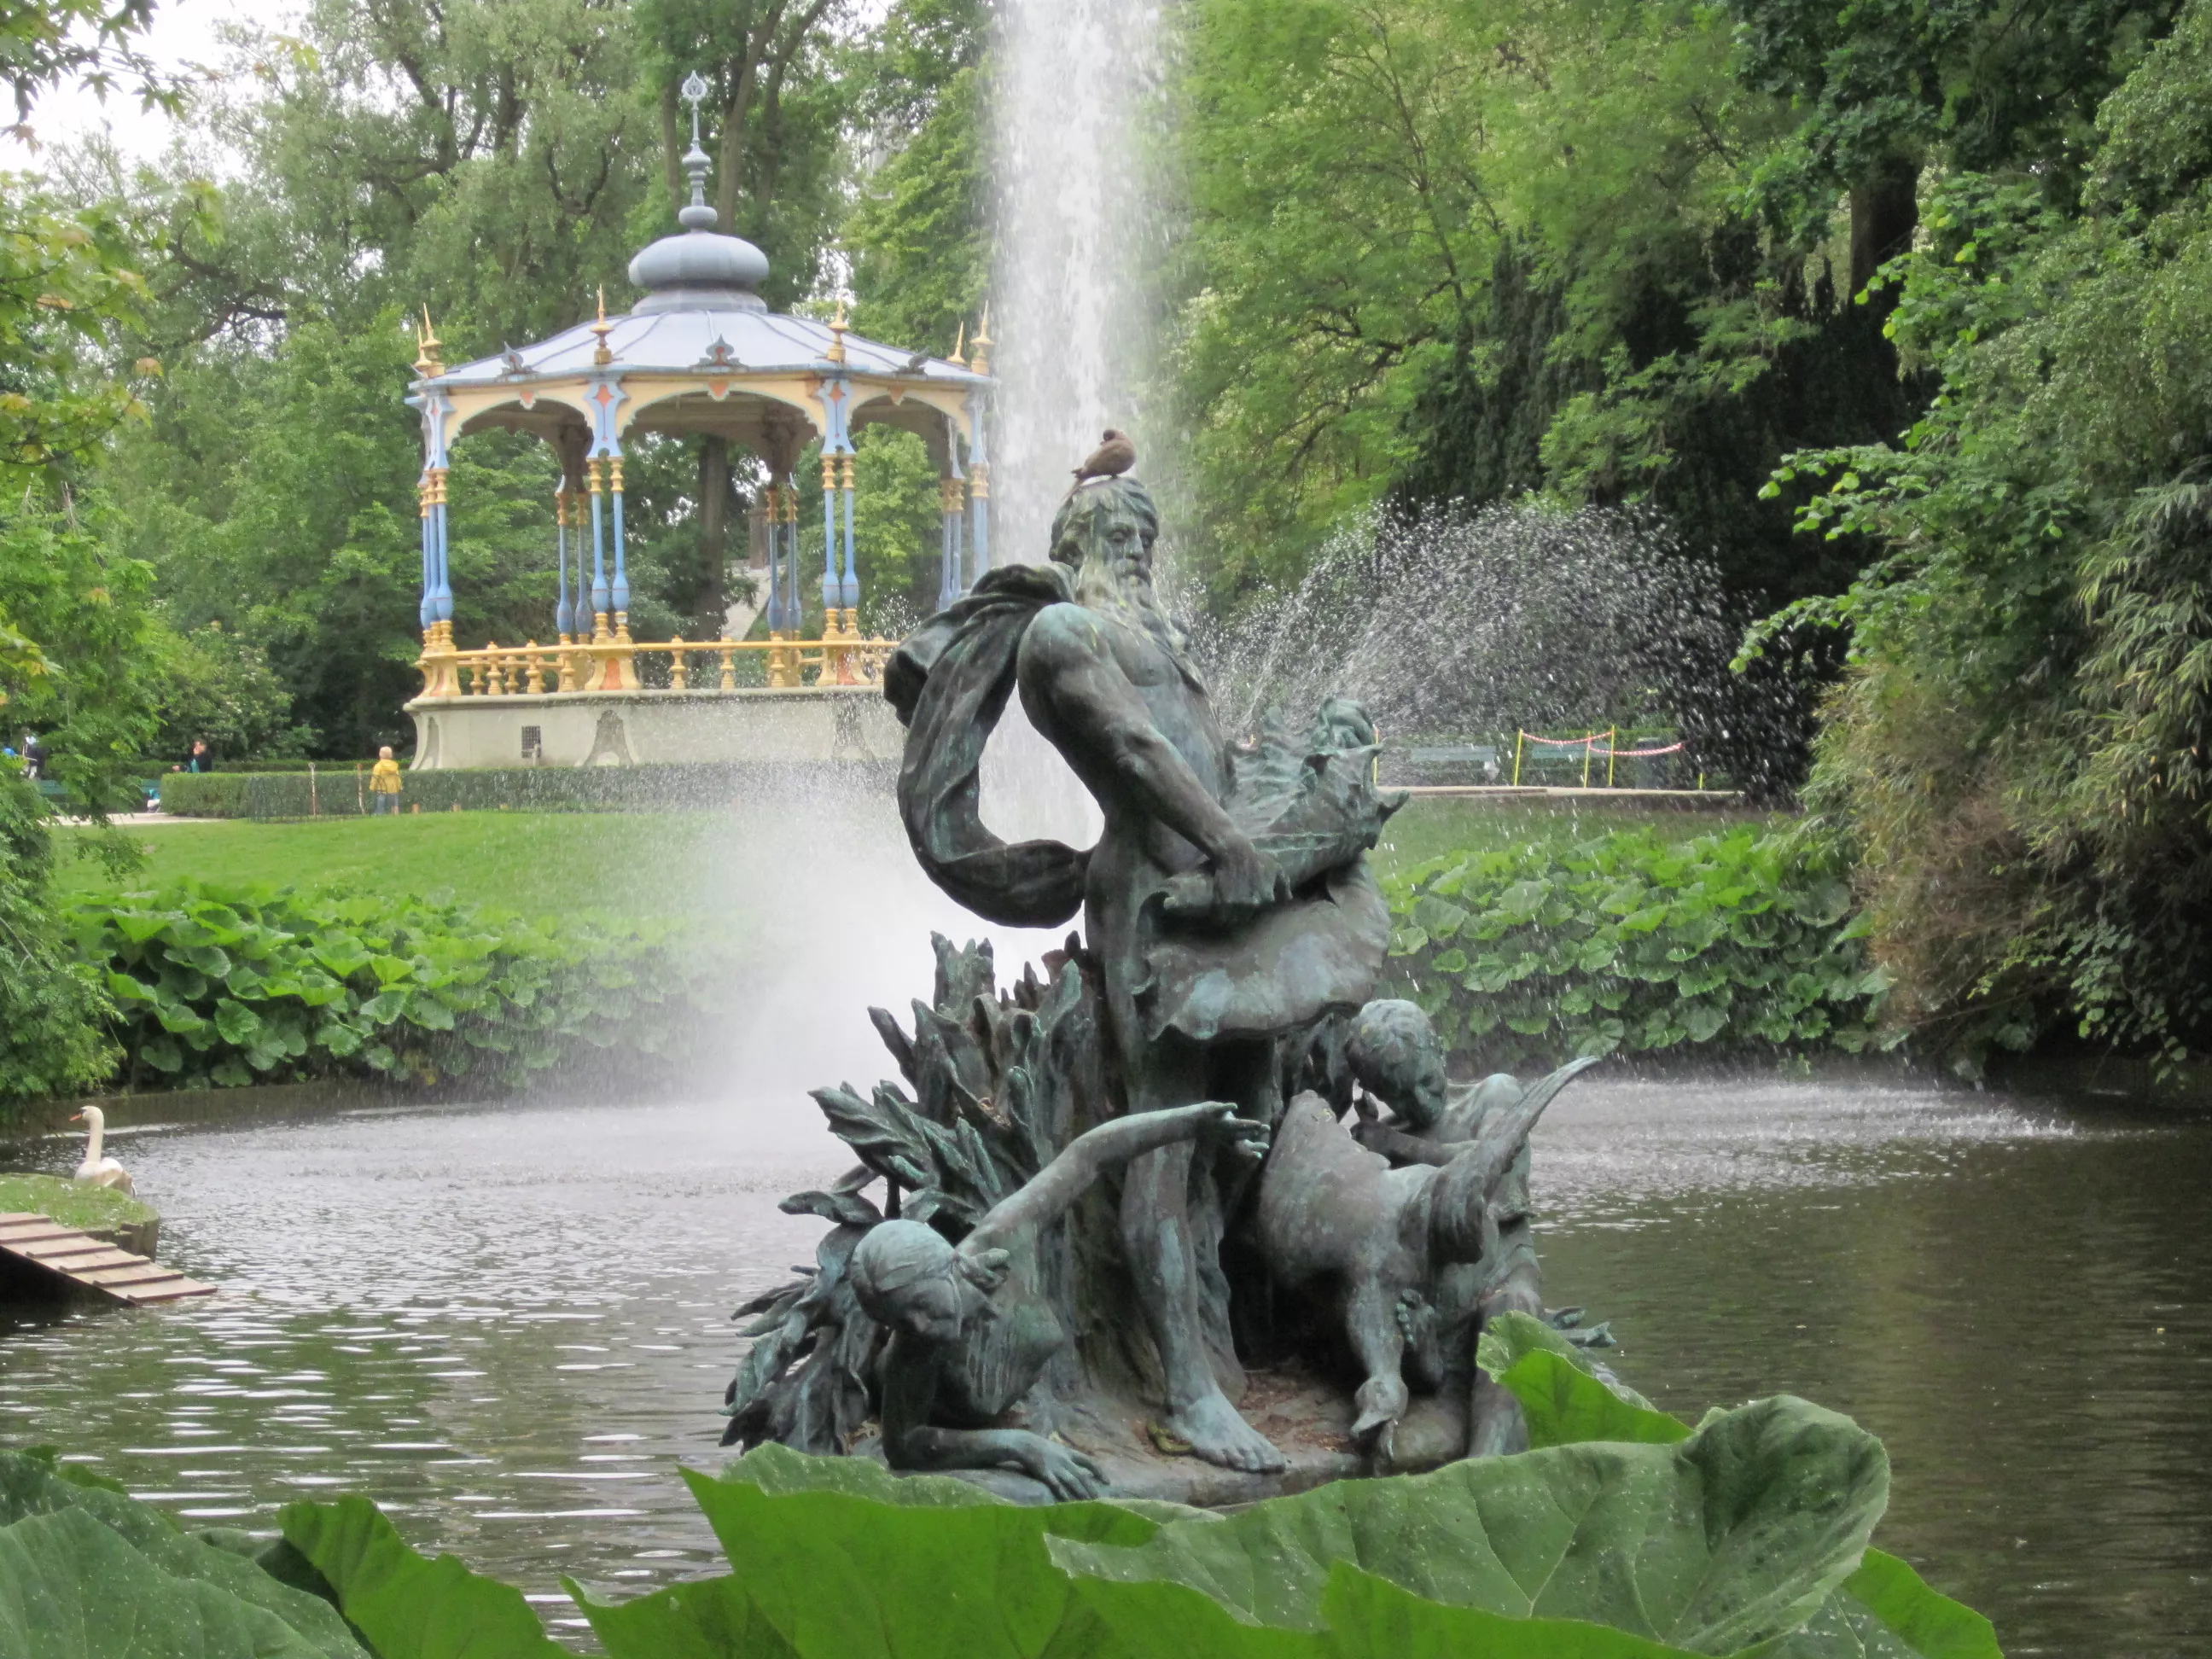 Koningin Astridpark in Belgium, Europe | Parks - Rated 3.6